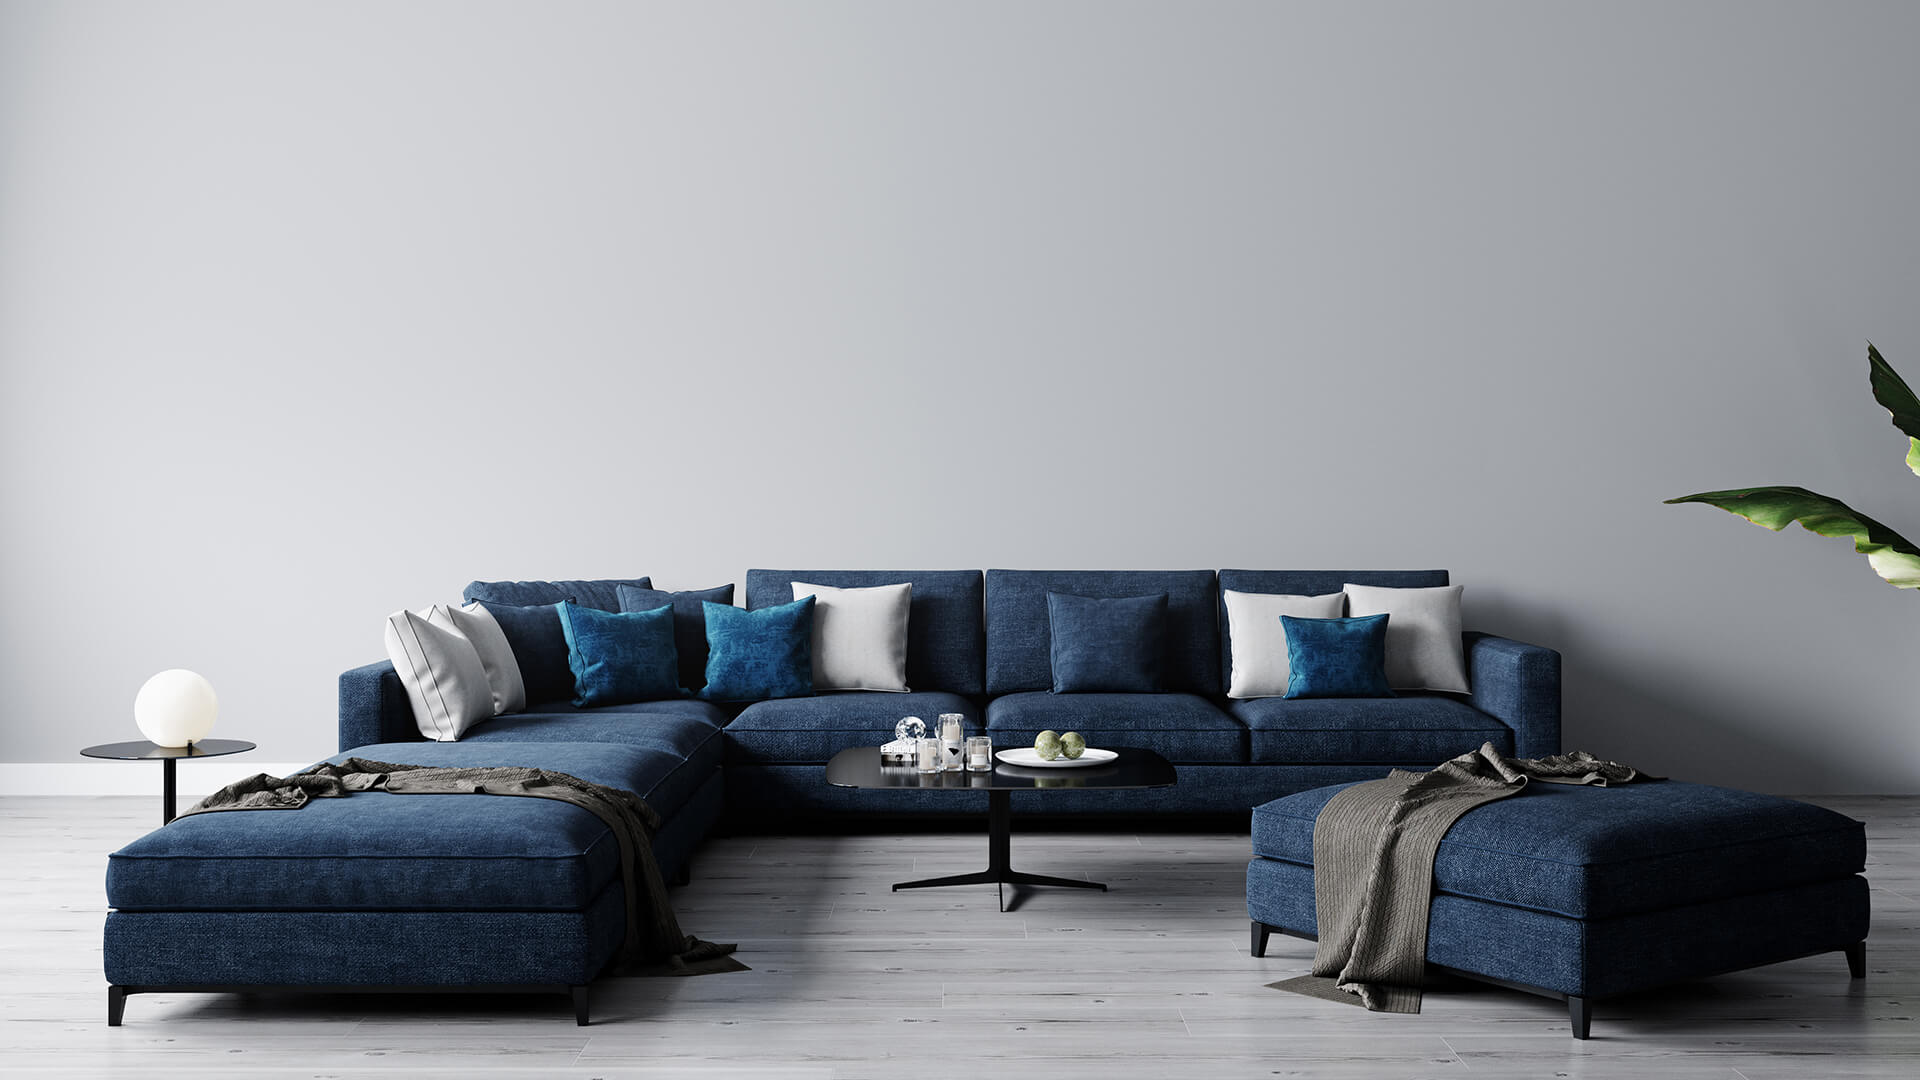 Sofa set in living room